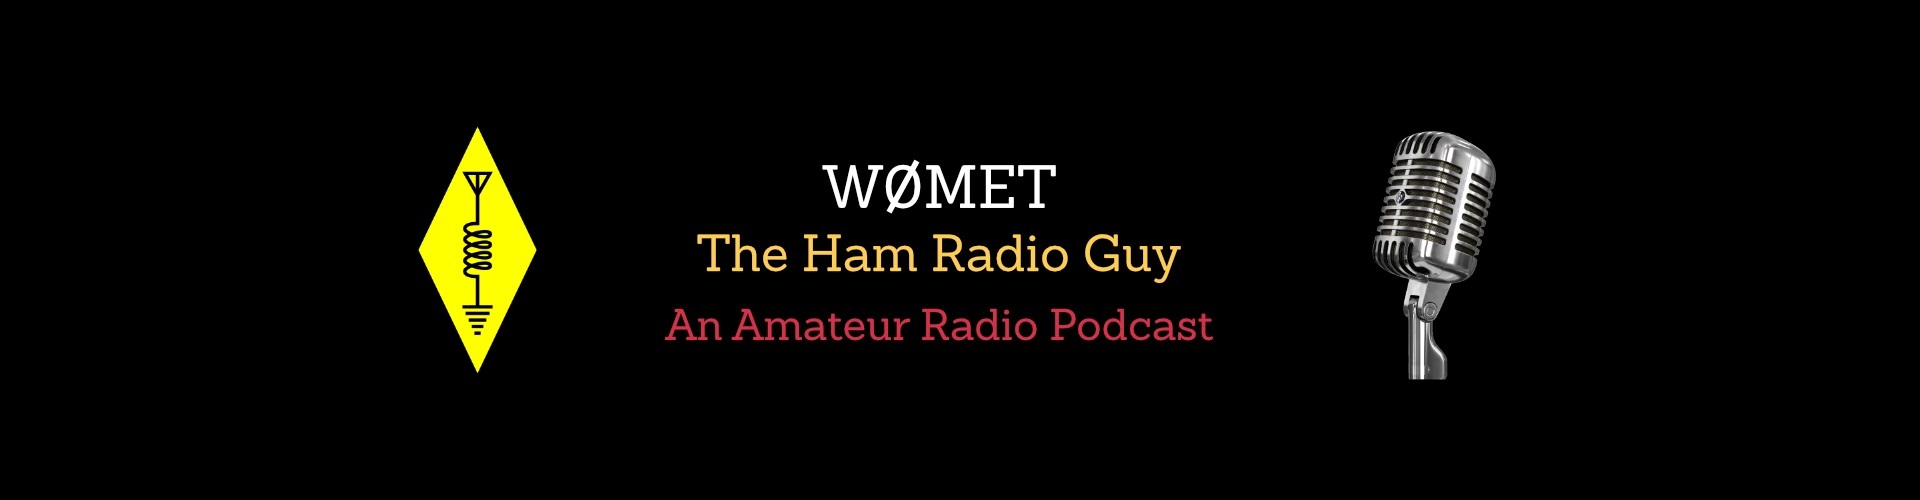 The Ham Radio Guy